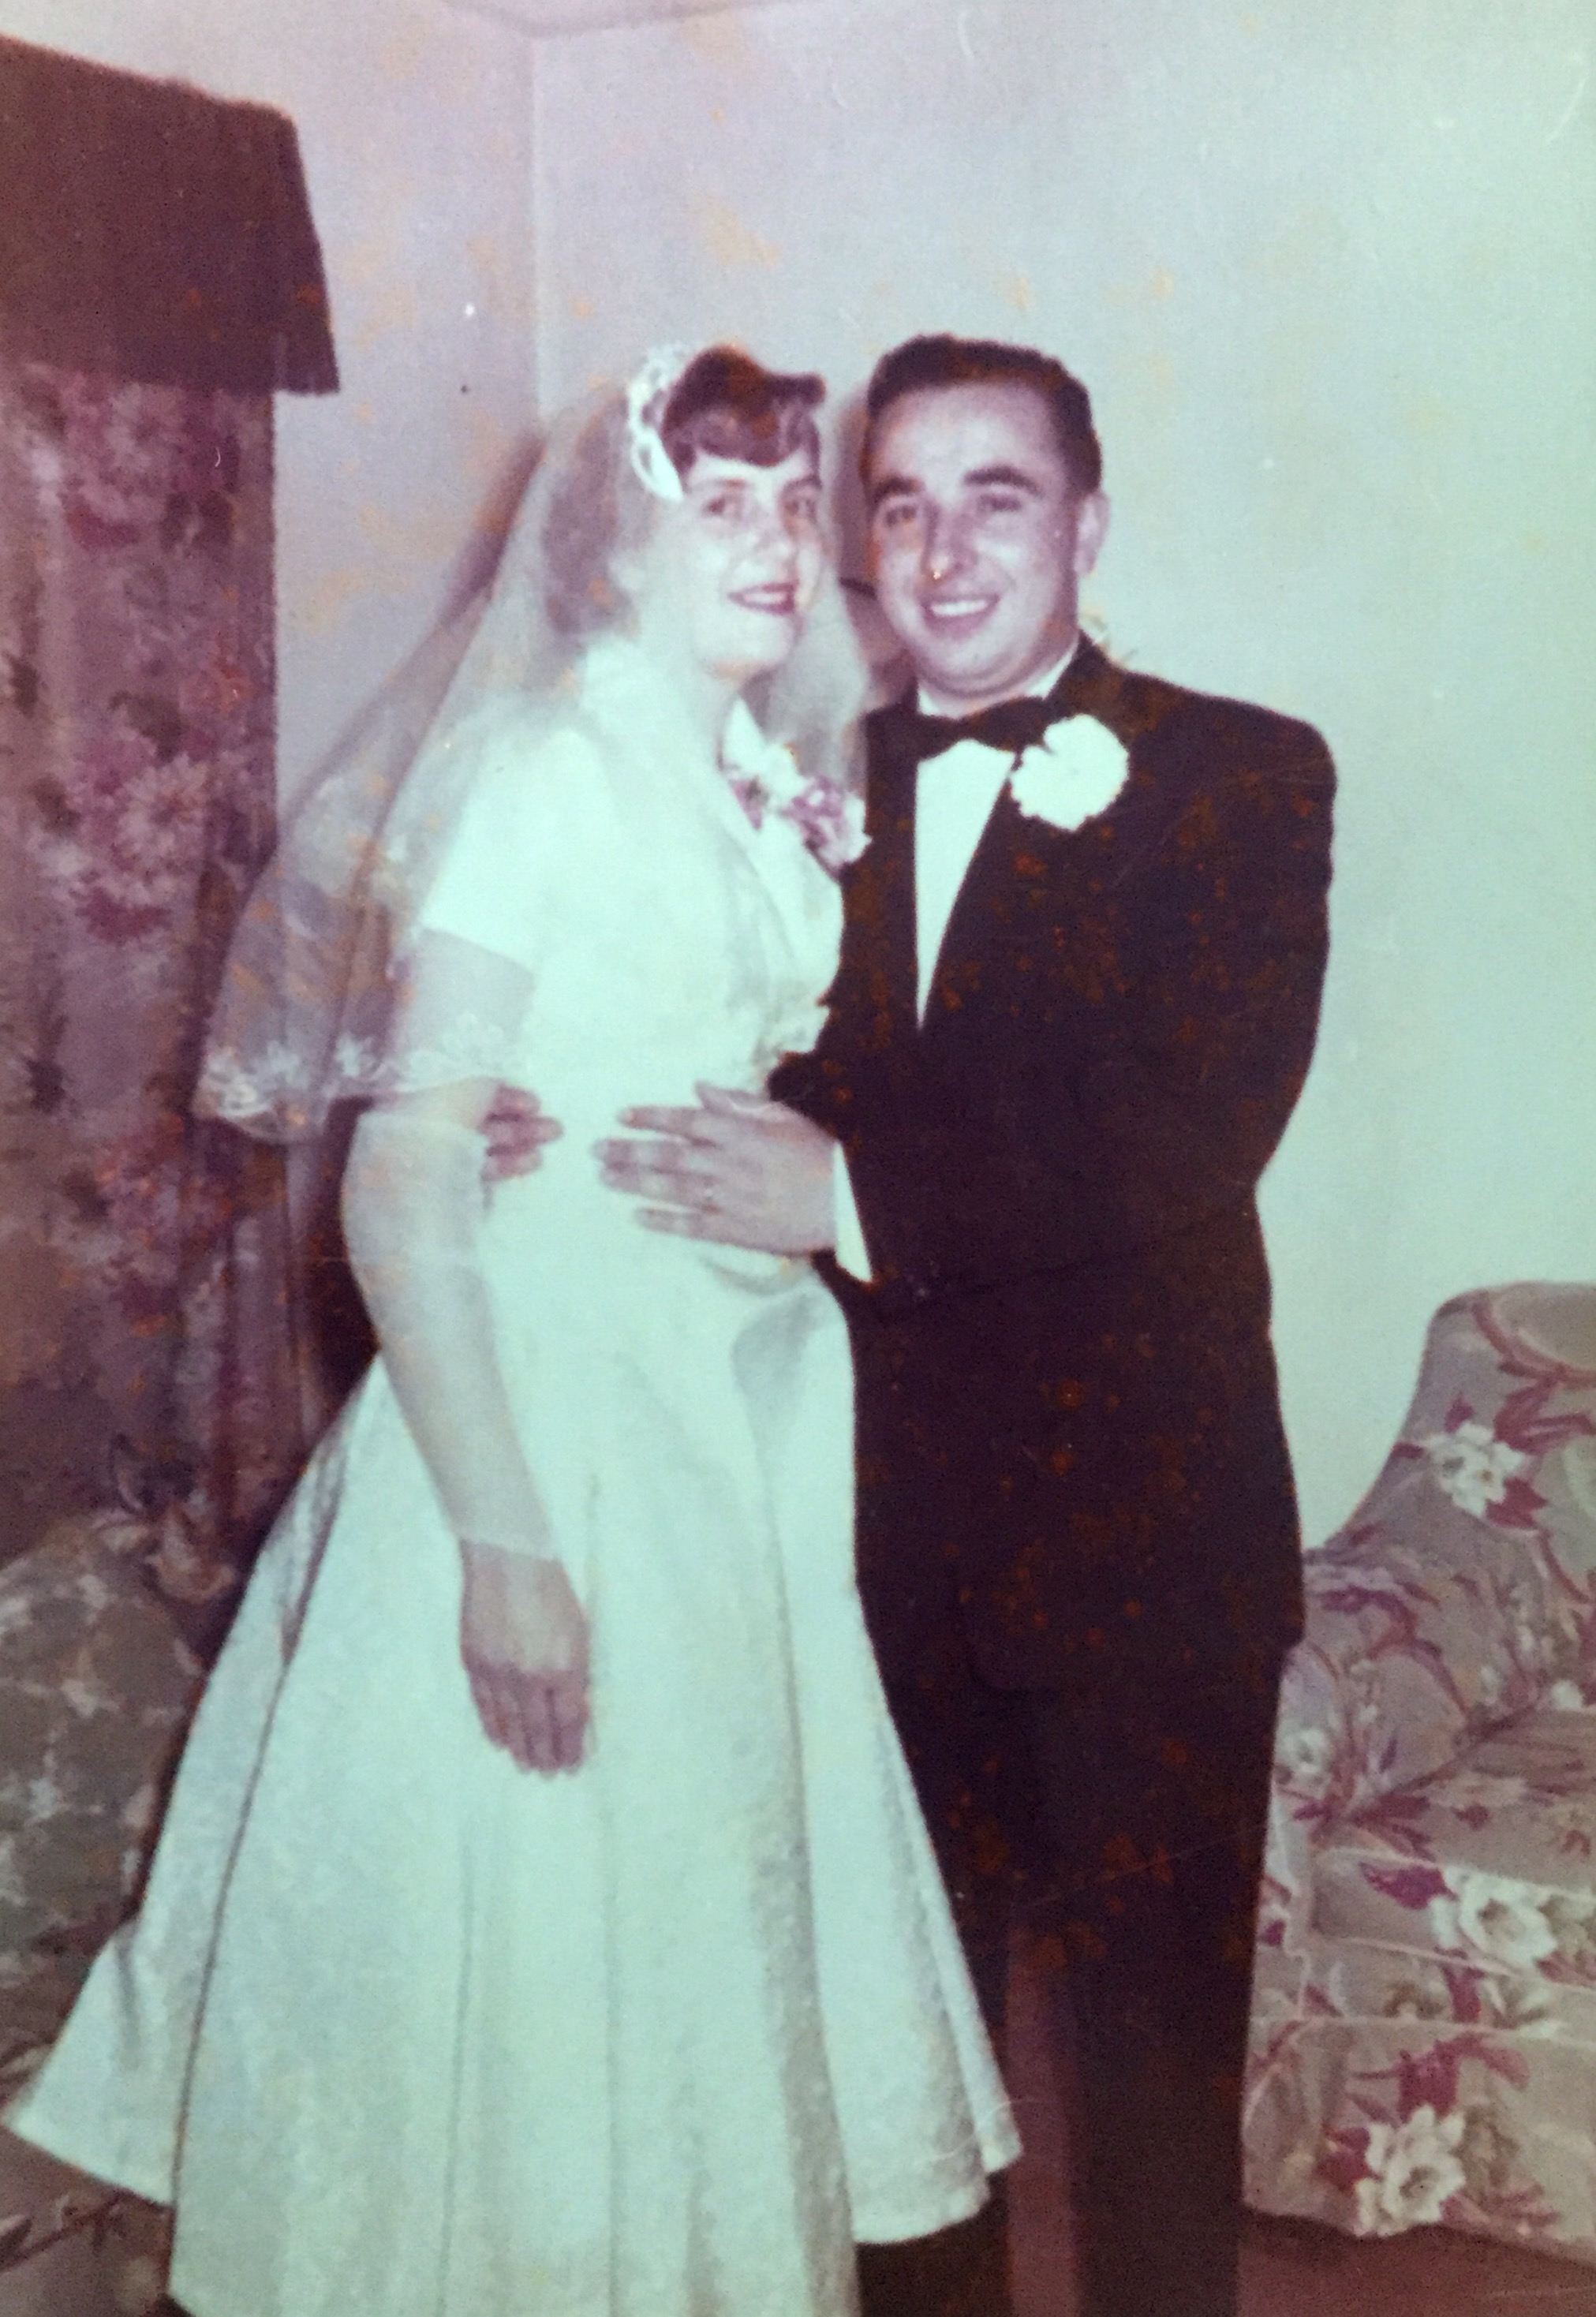 Mom and dad's wedding photo 1956